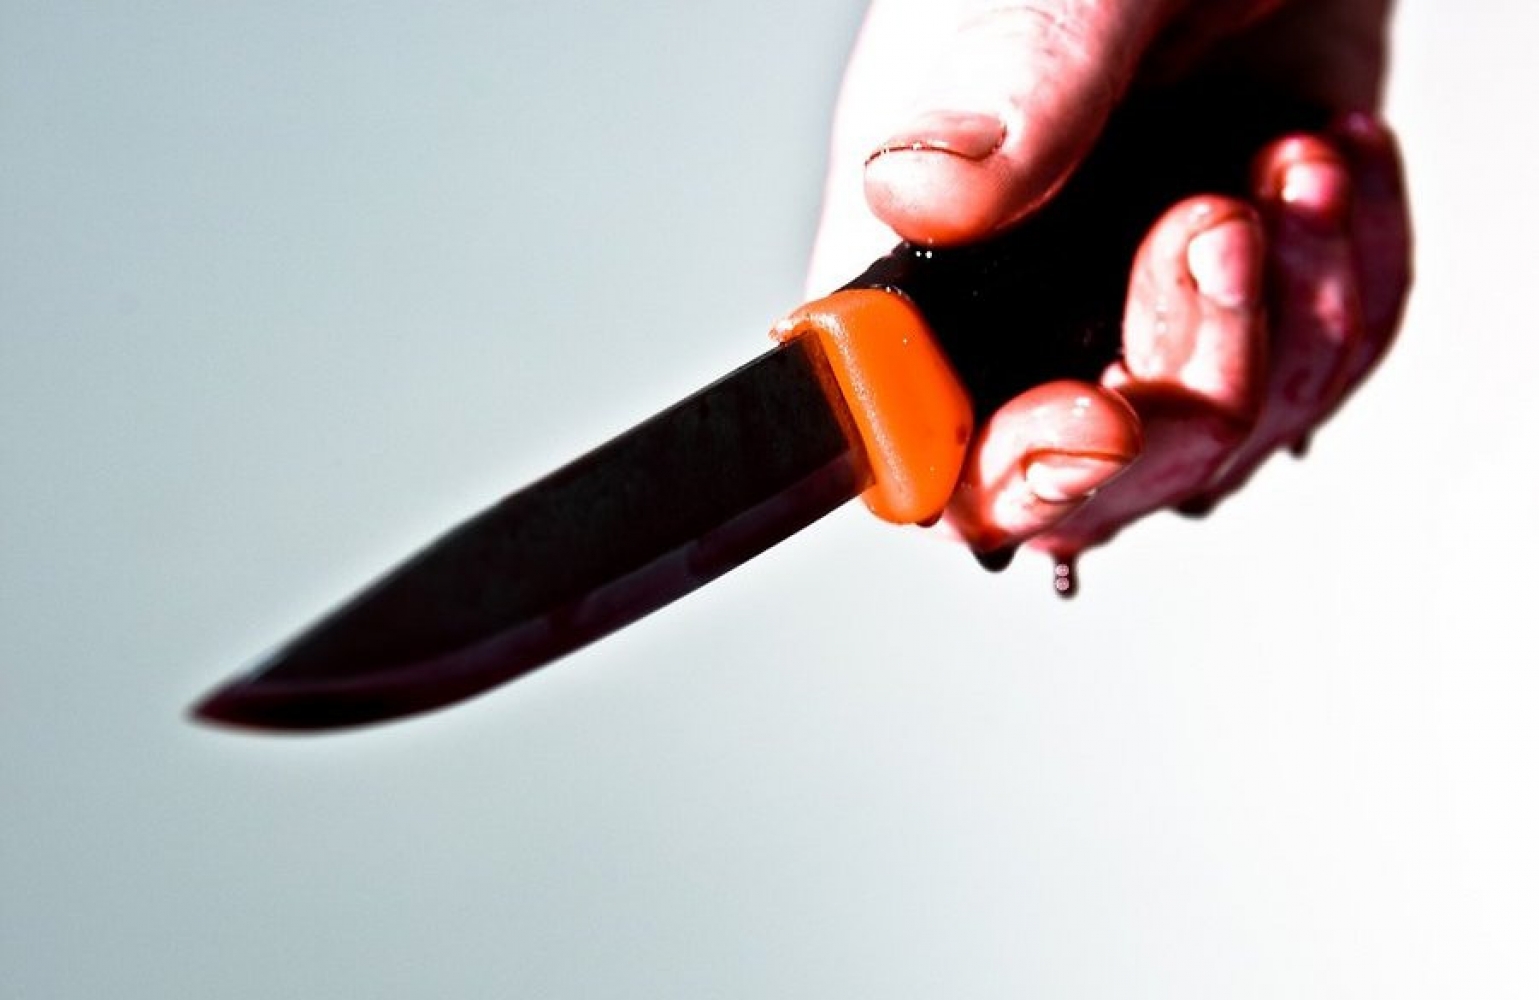 фото ножа с кровью